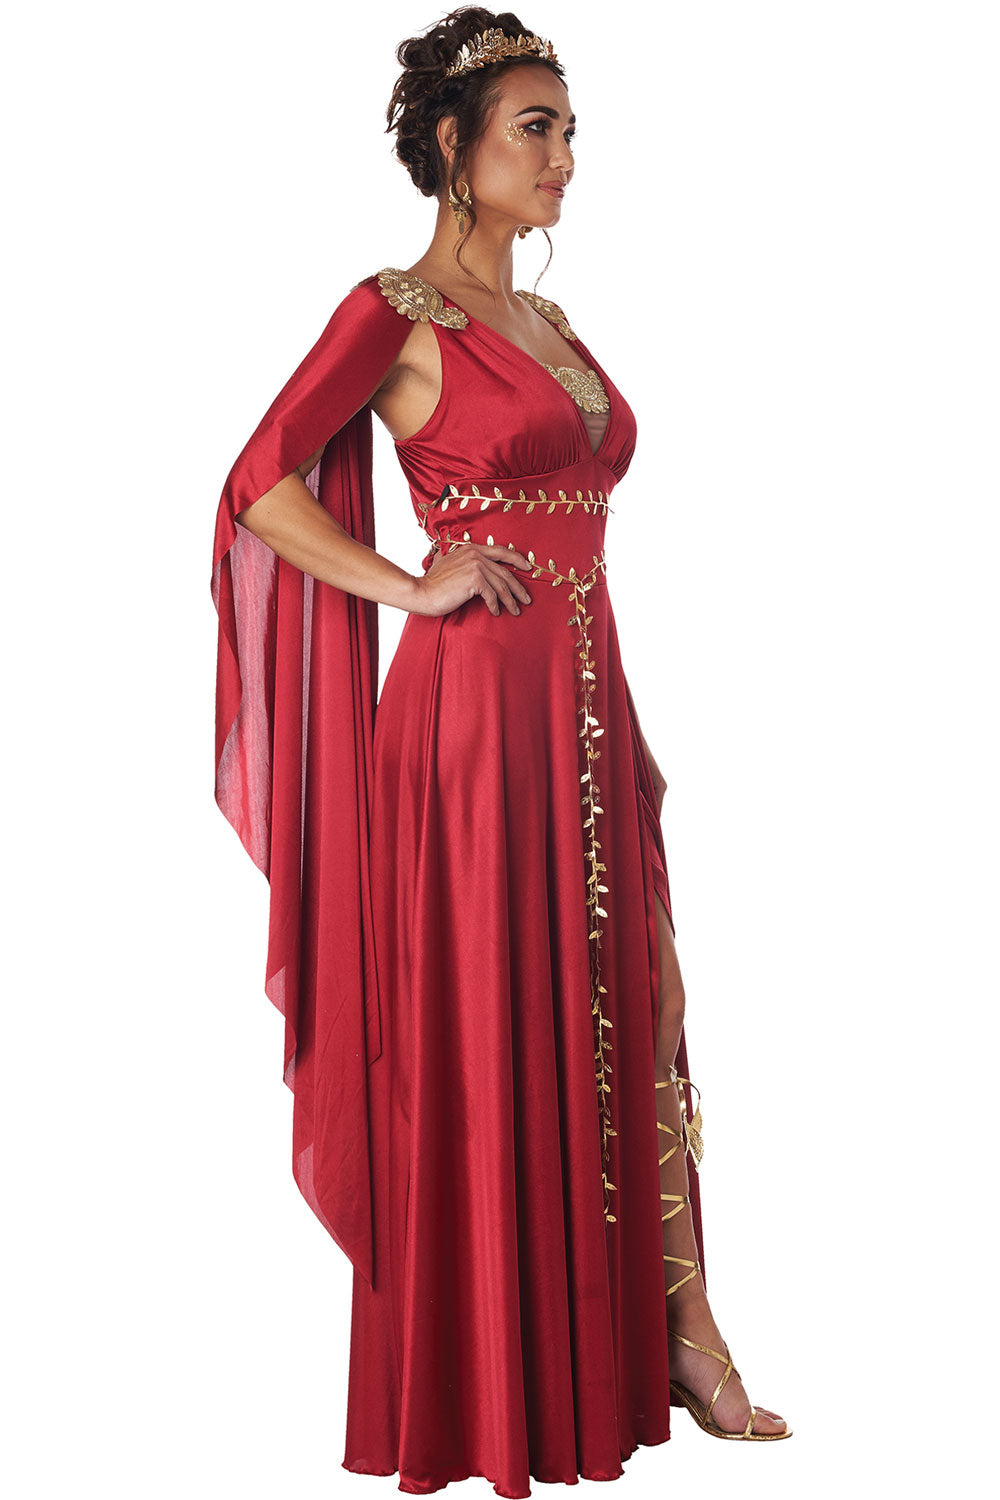 Roman Goddess / Adult California Costume 5021-124